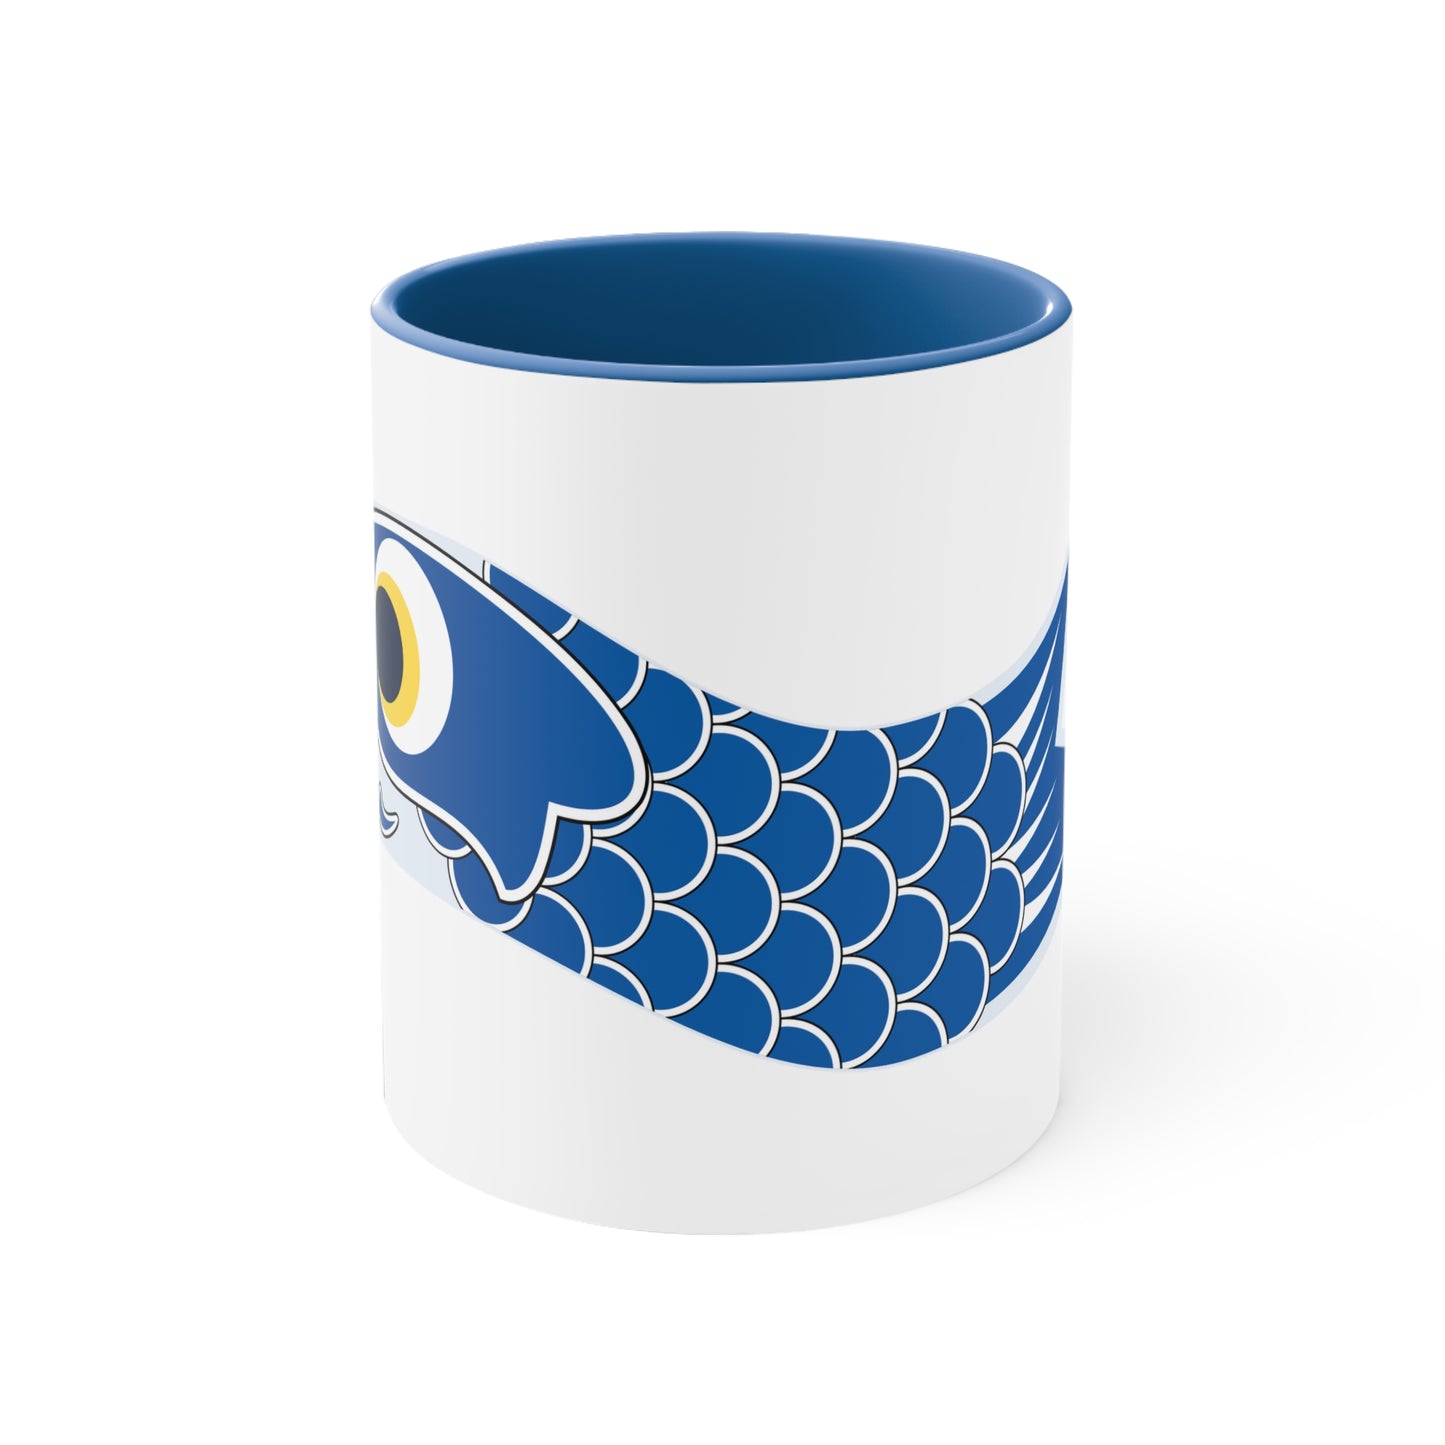 Blue Koinobori (Carp Streamer) Accent Coffee Mug, 11oz